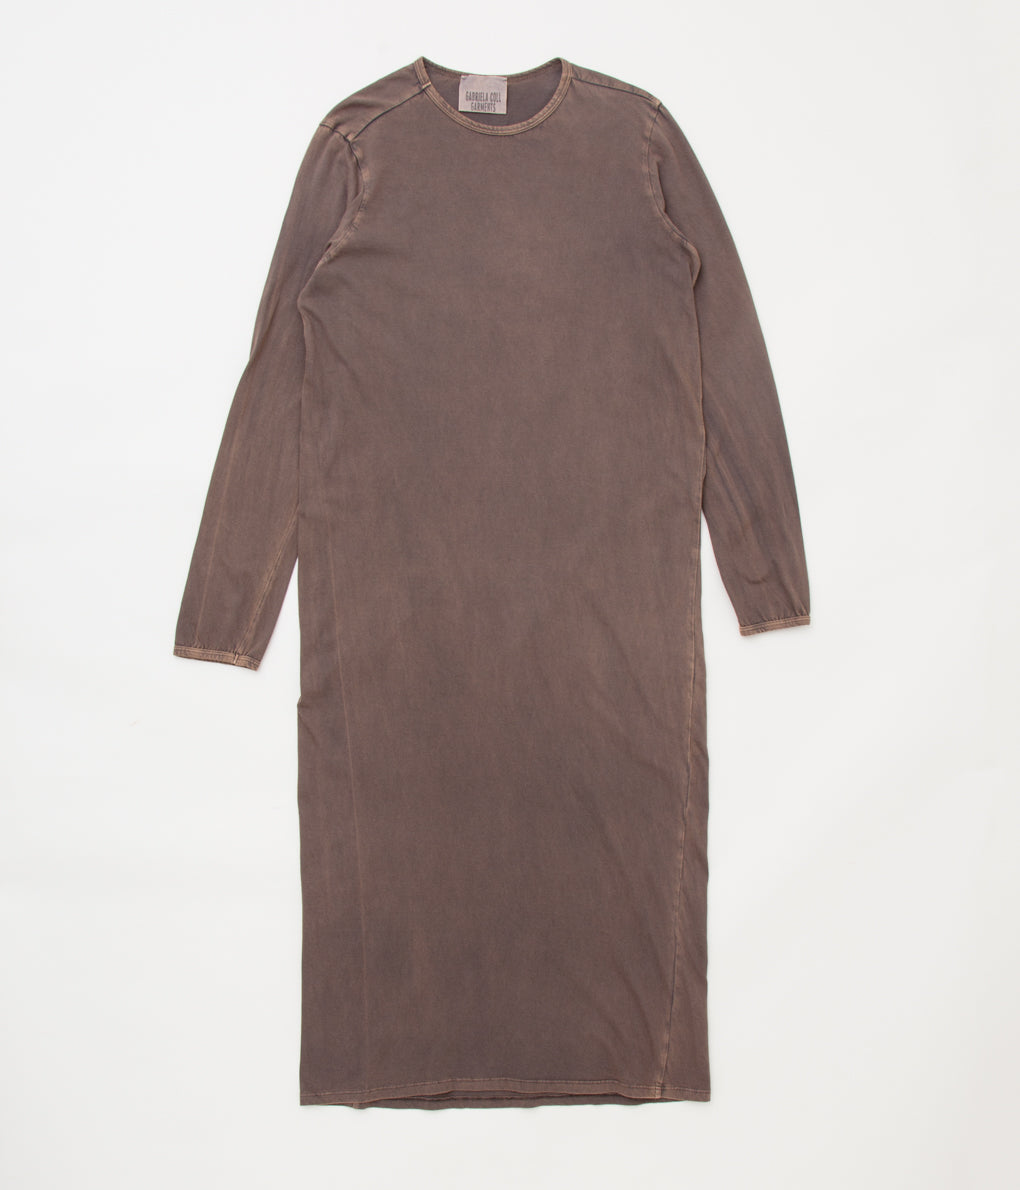 GABRIELA COLL GARMENTS "NO.154 LONG SLEEVE T-SHIRT DRESS" (BLACK SALT WASH)